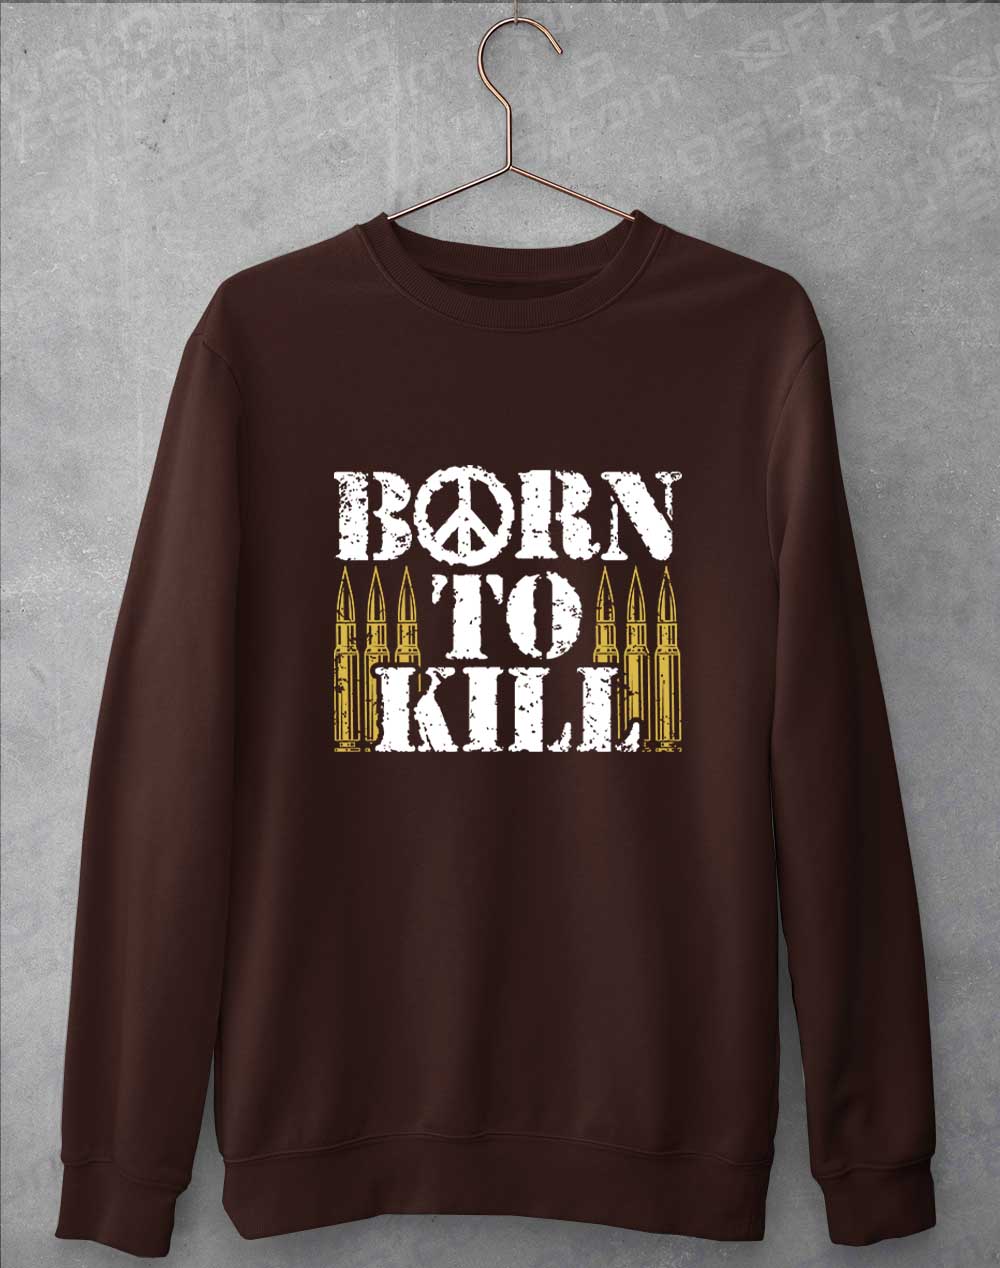 Hot Chocolate - Born to Kill Peace Sign Sweatshirt